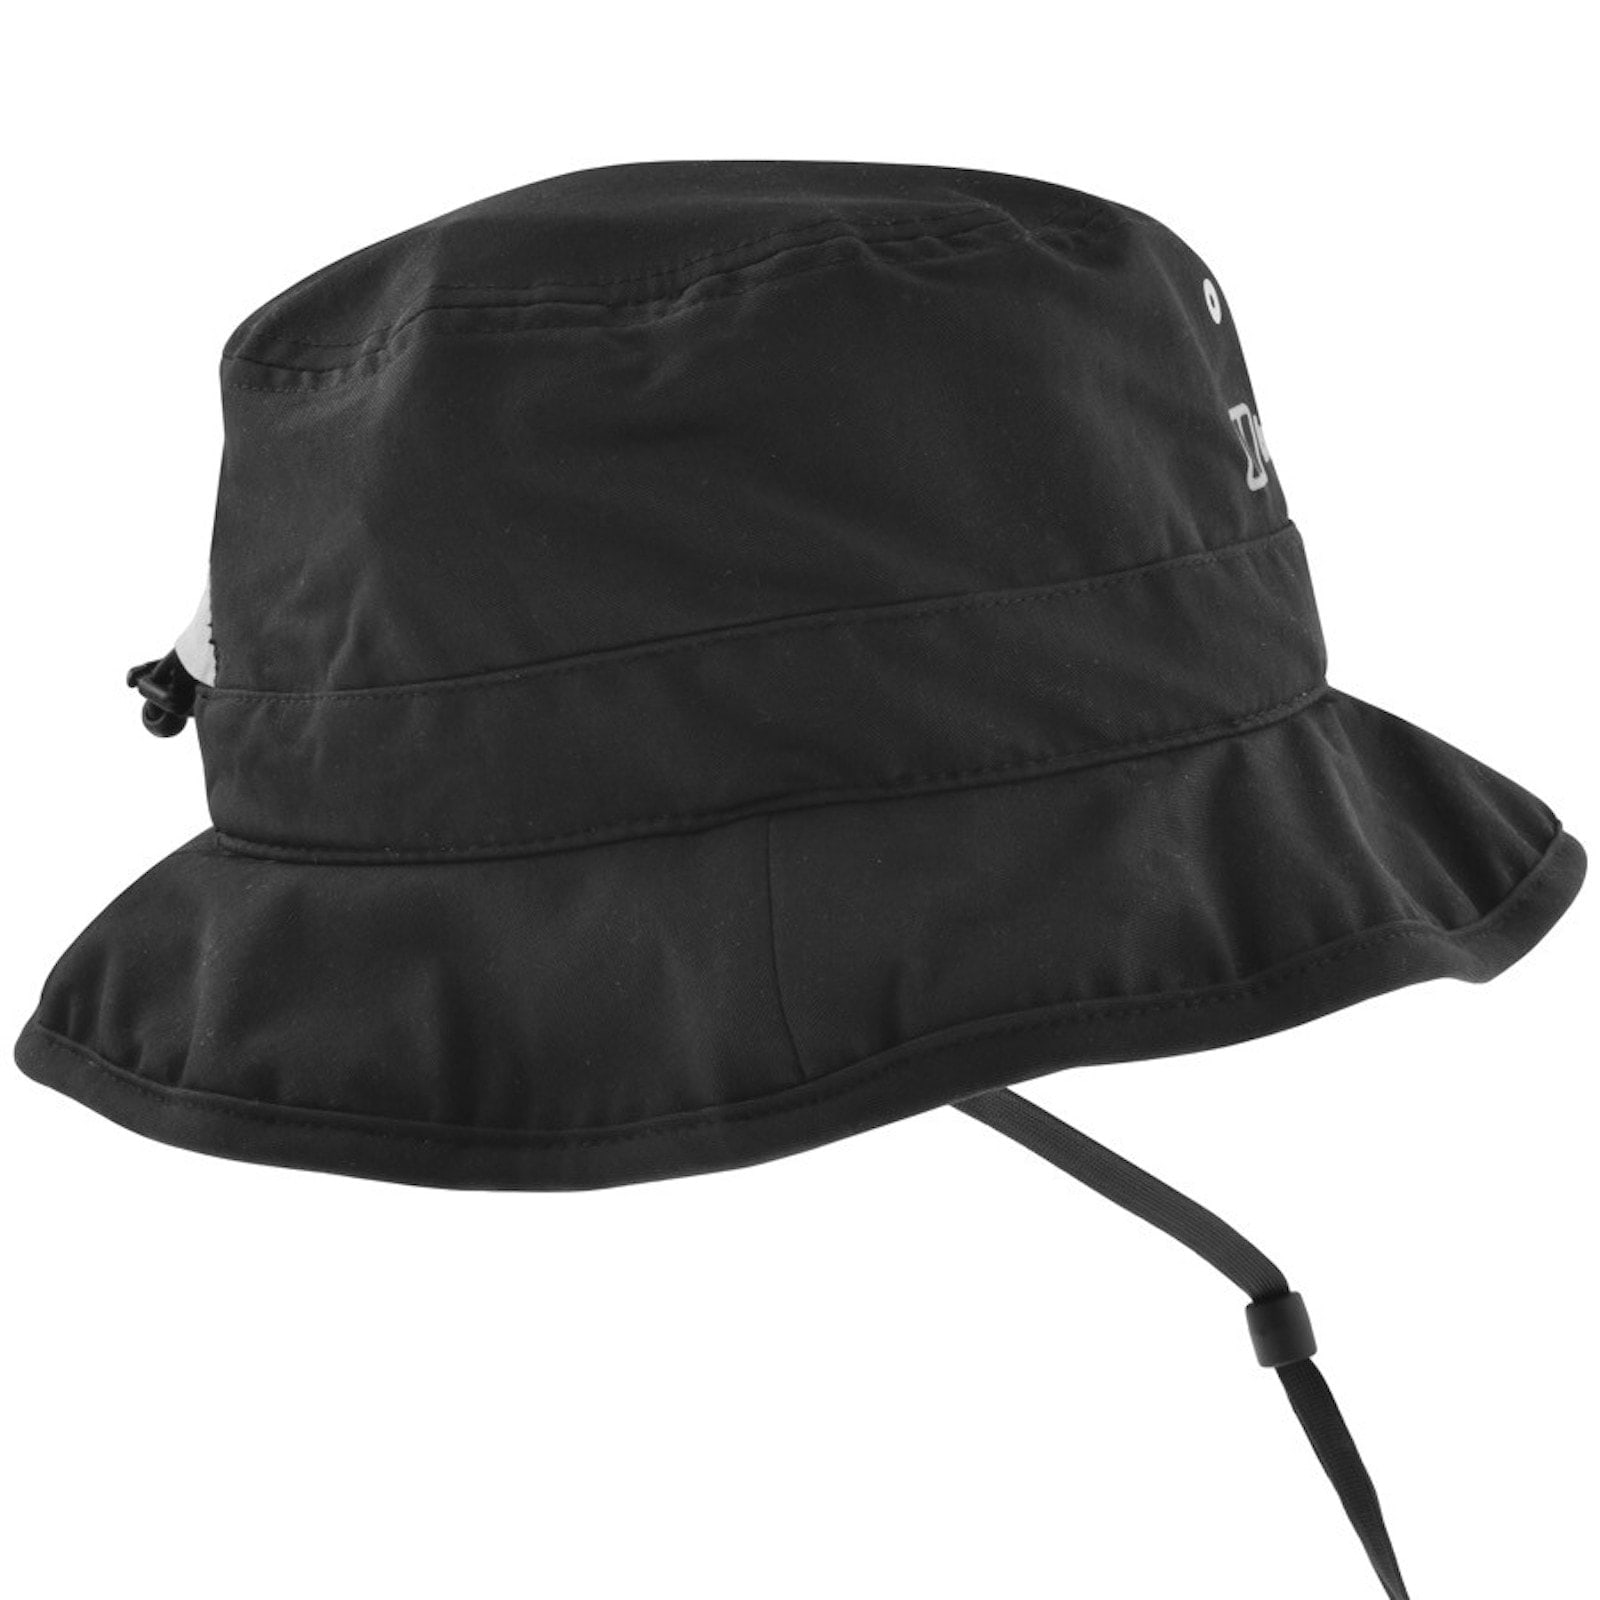 S.K. Manor Hill Boonie Bucket Hat in Black for Men